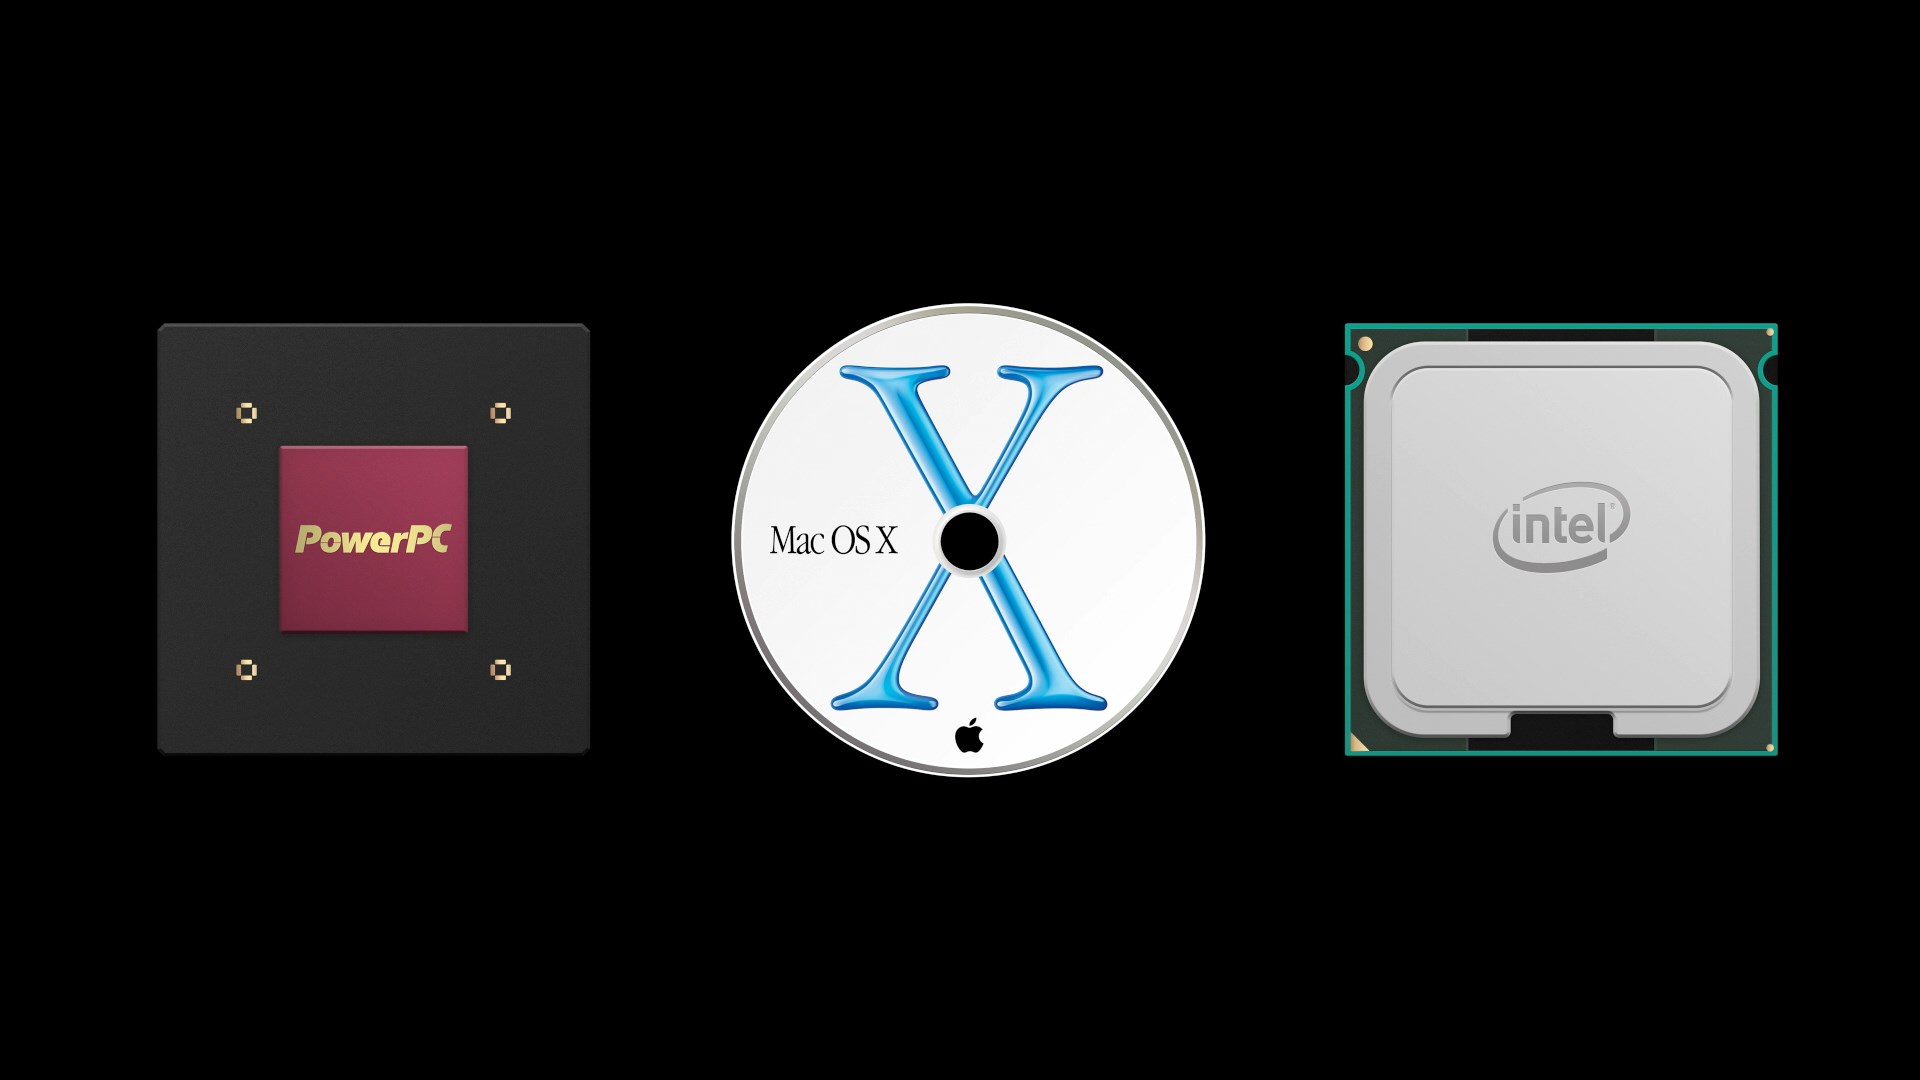 Power PC, Mac OS X, and Intel processor.